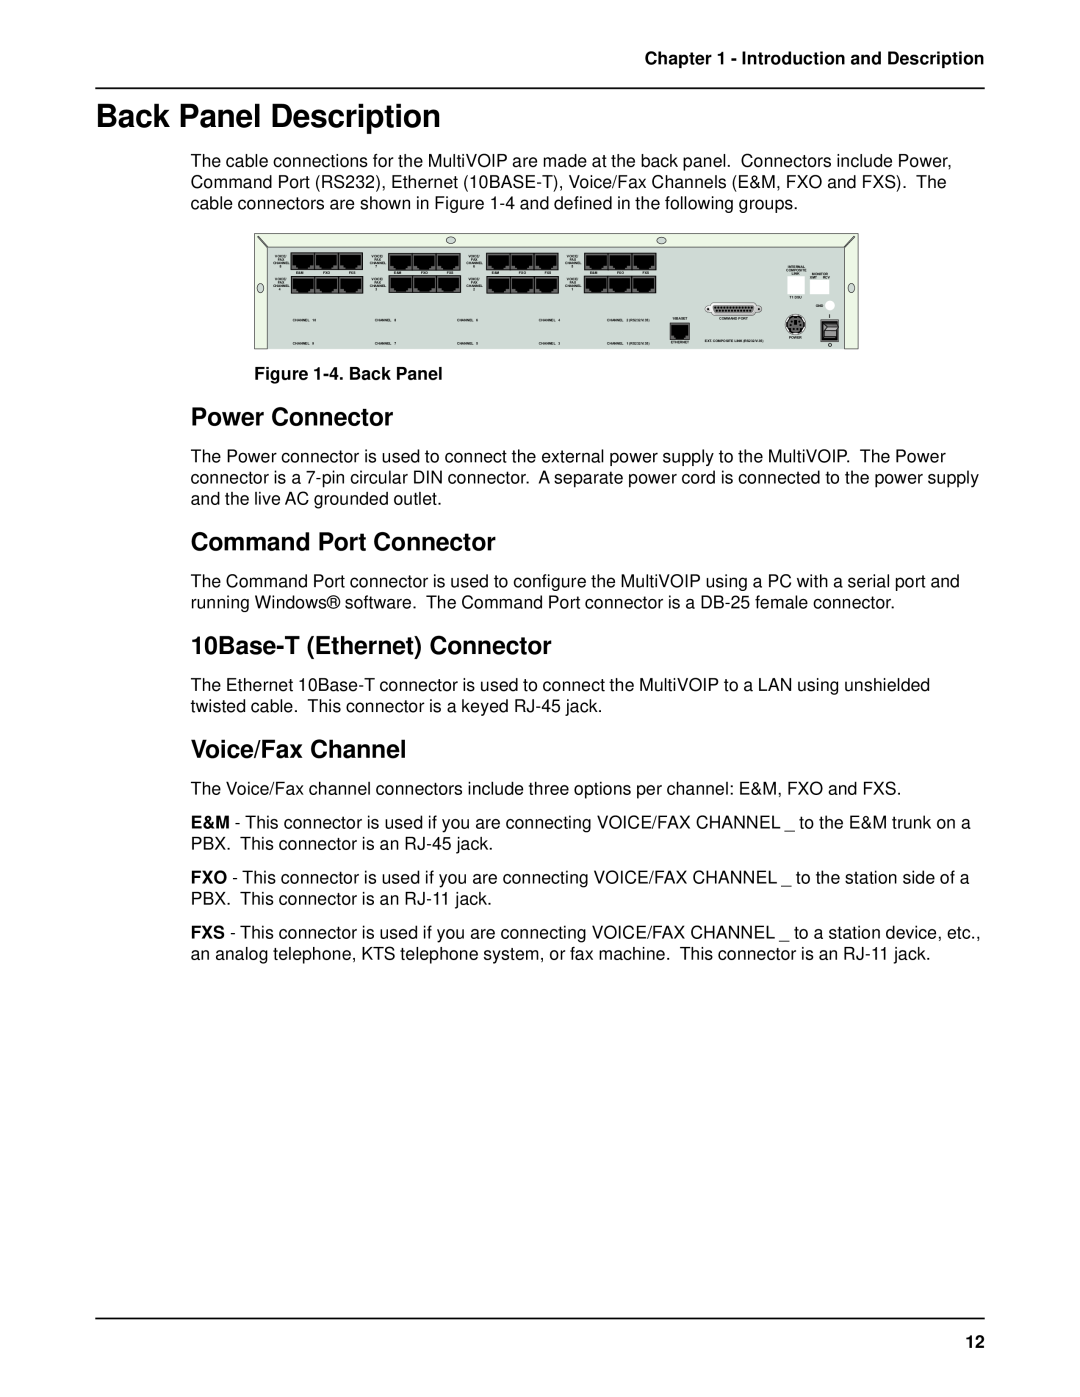 Multi-Tech Systems MVP 800 Back Panel Description, Power Connector, Command Port Connector, 10Base-T Ethernet Connector 